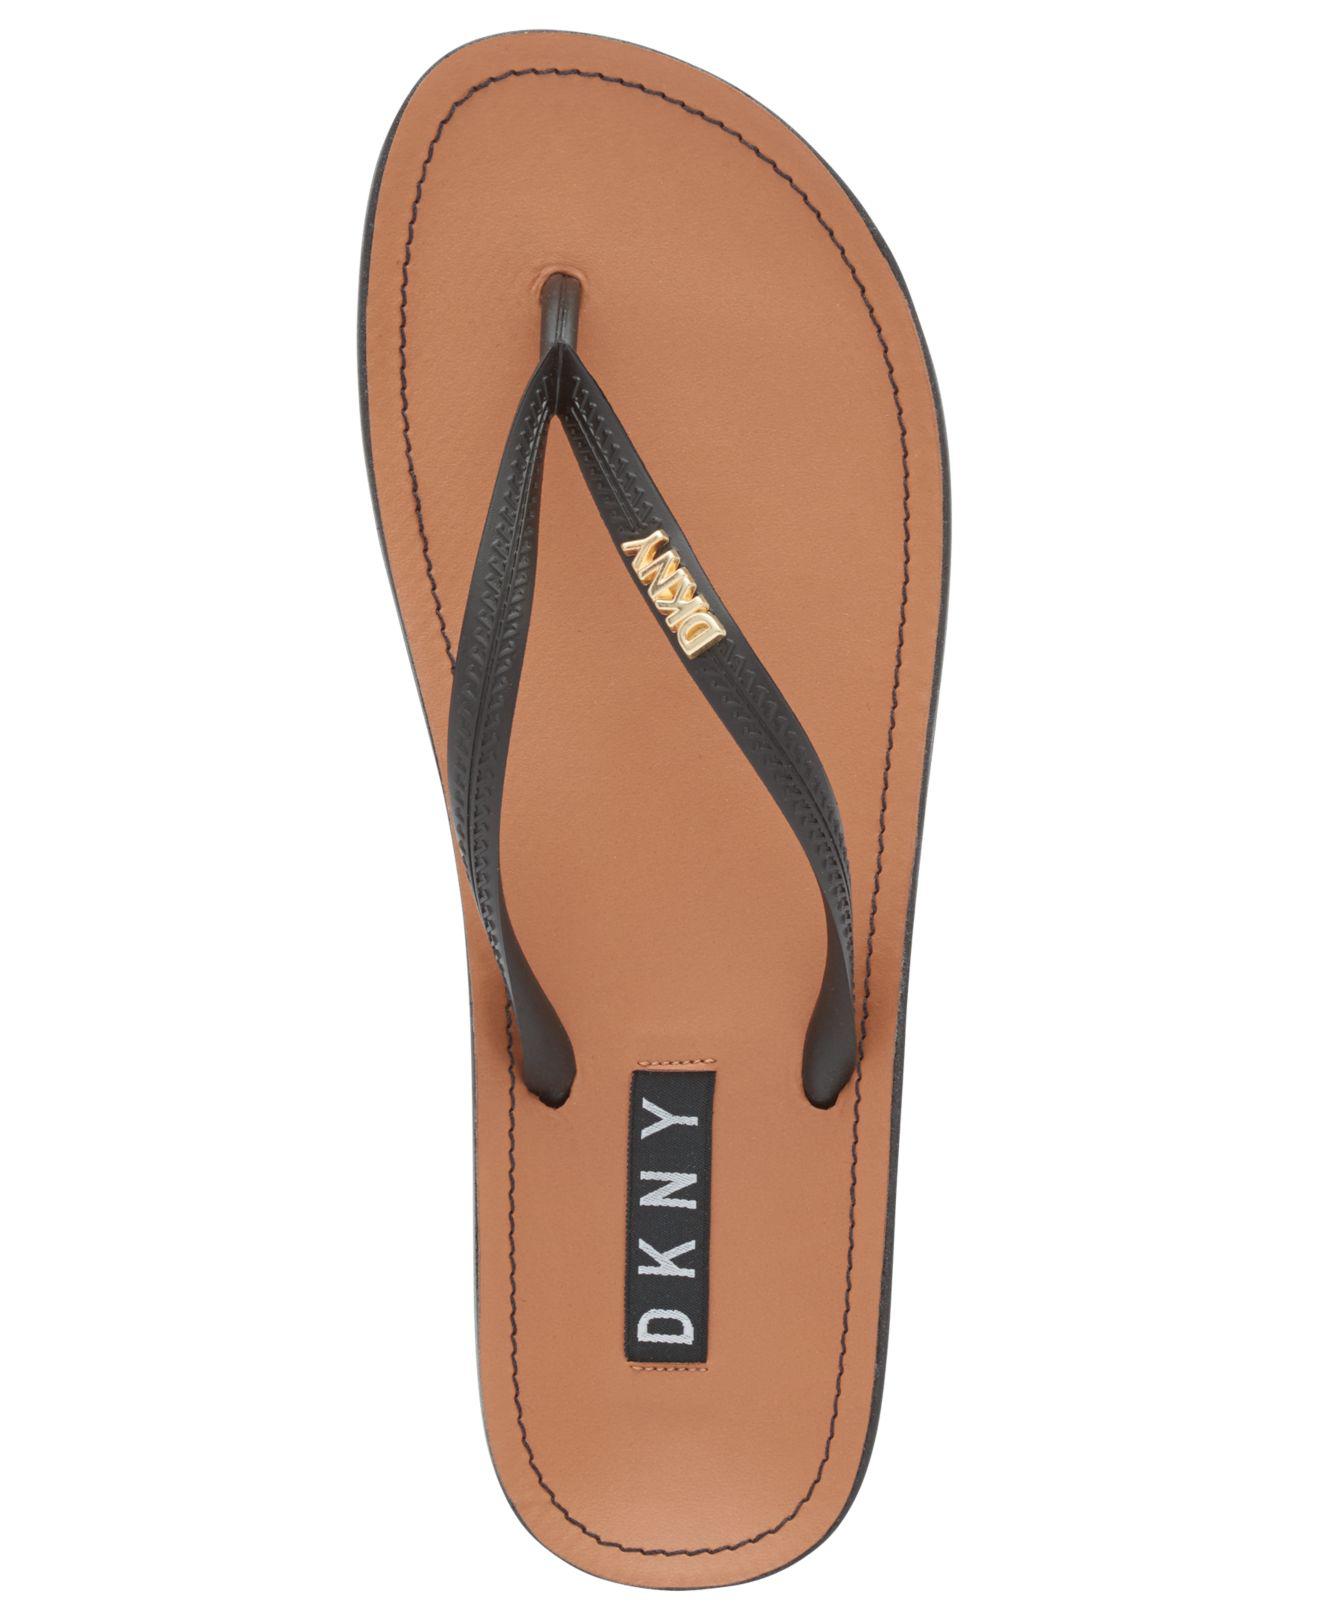 Buy > dkny flip flops sandals > in stock